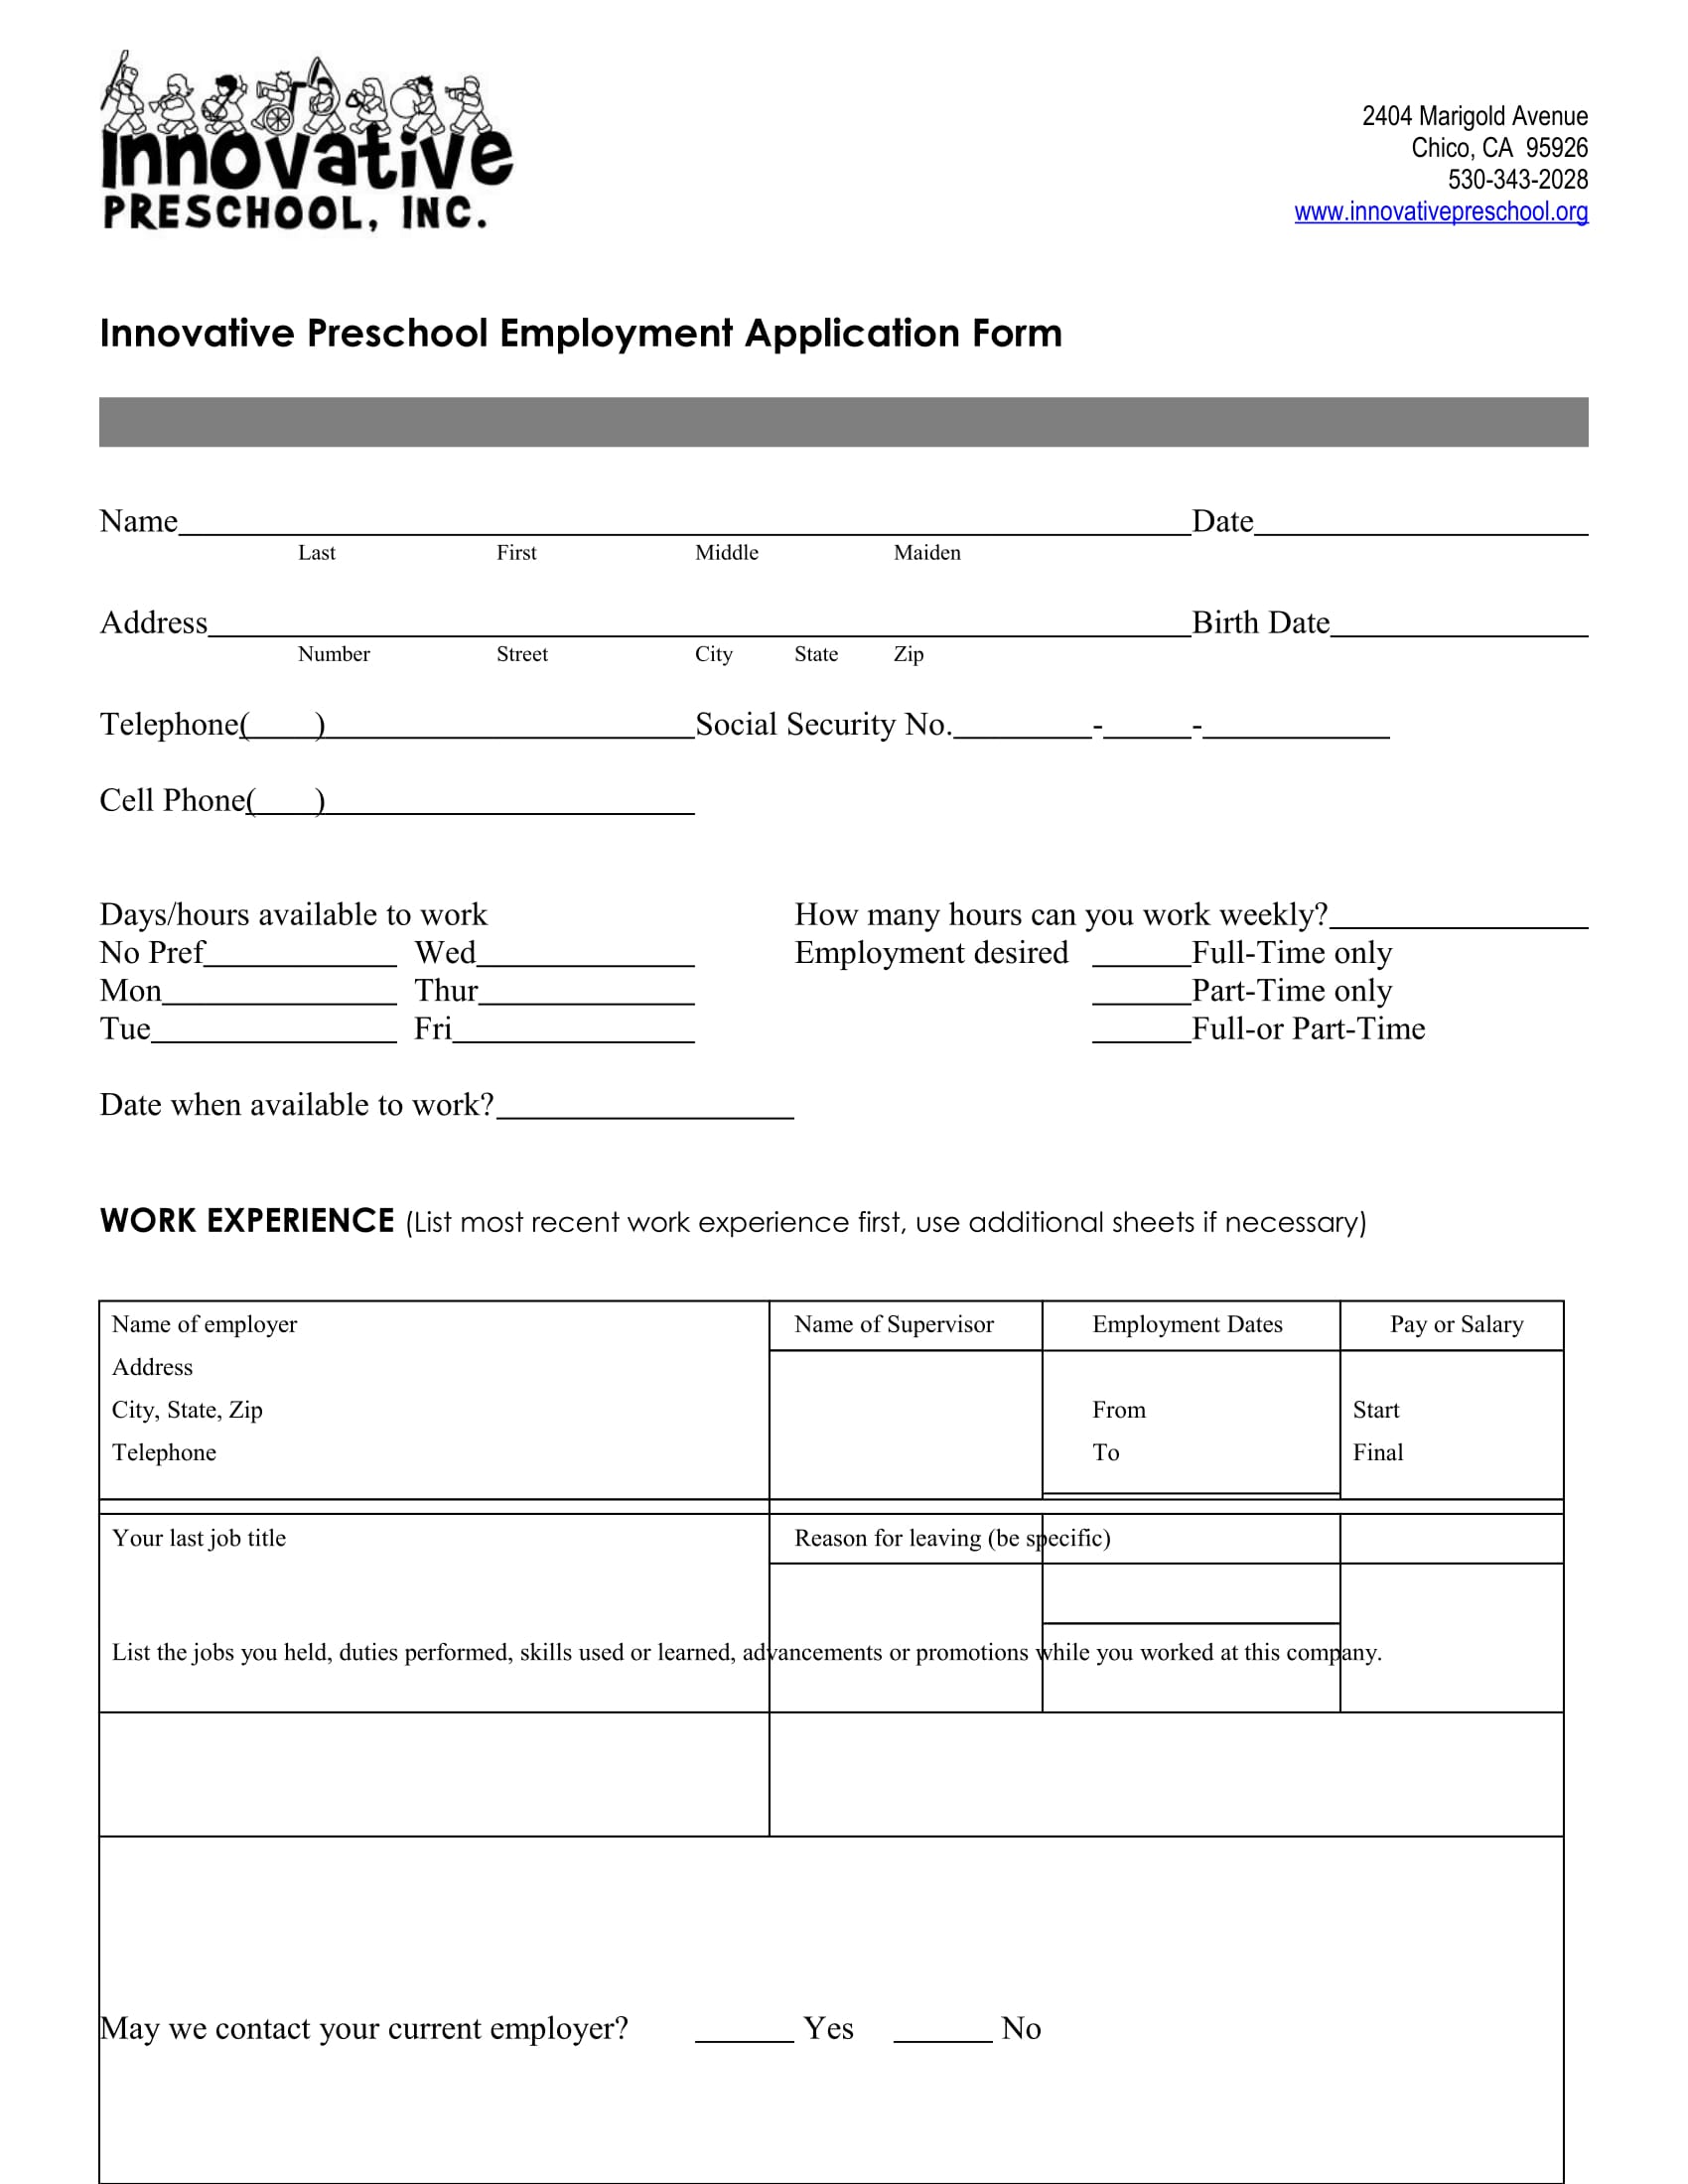 preschool employment application form 1